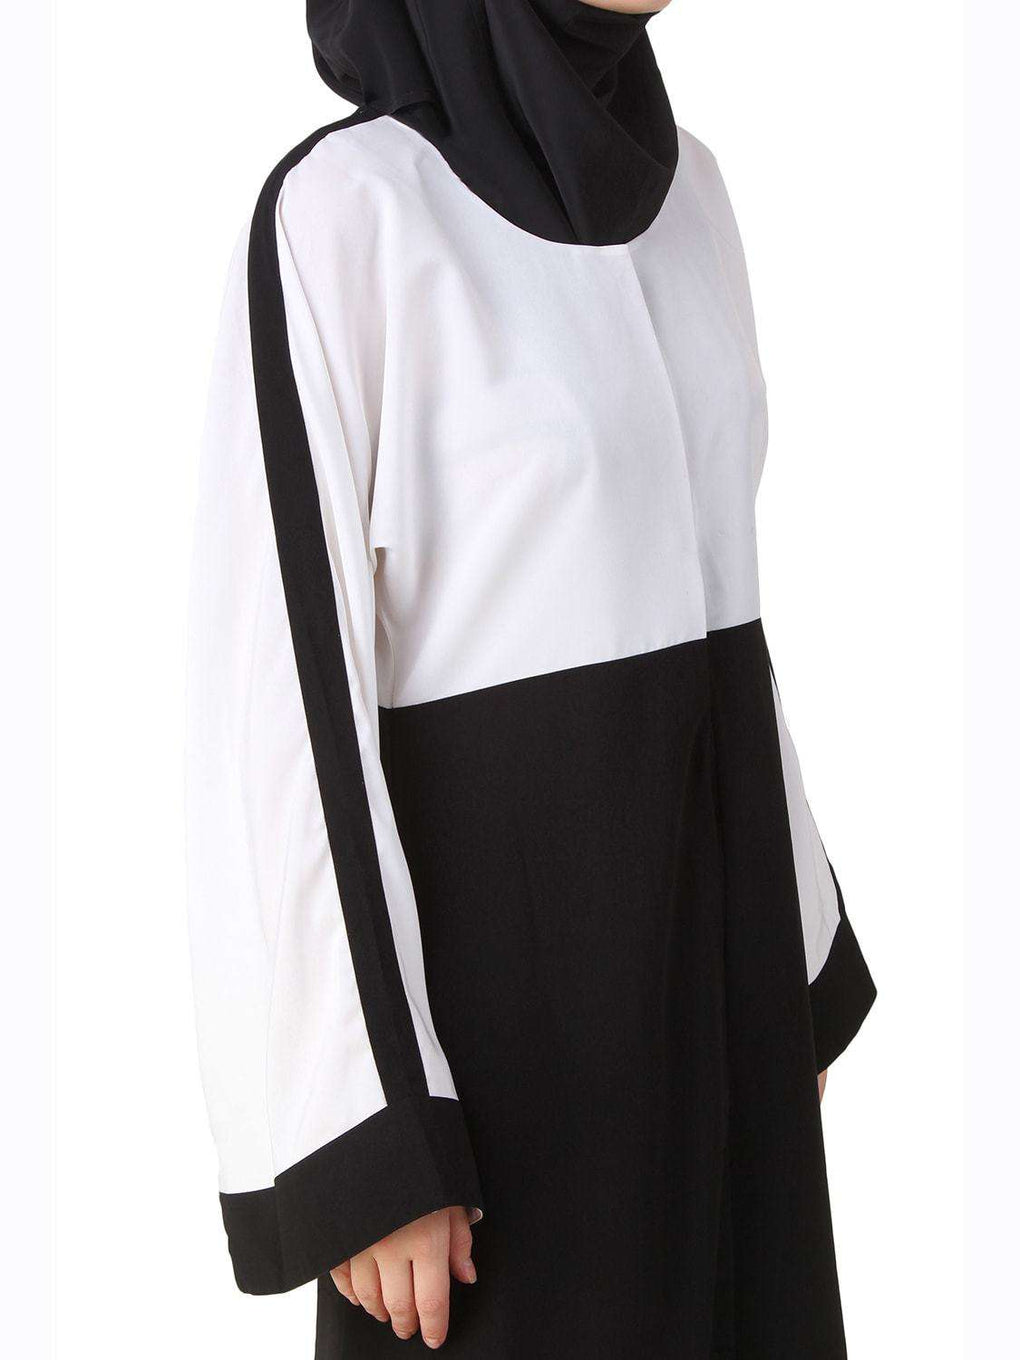 Norhan Black & White Nida Dubai Abaya Design